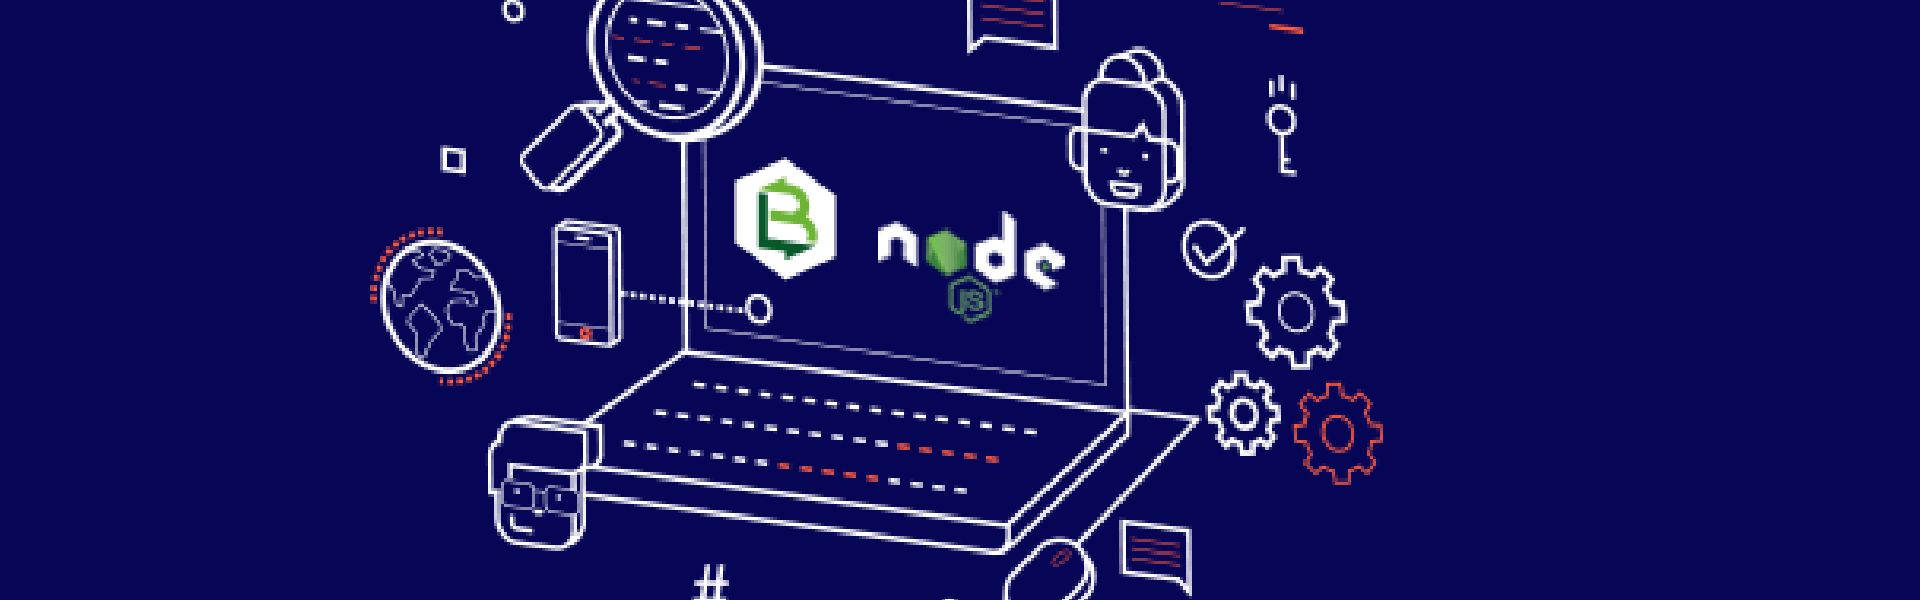 Rapid API development using LoopBack and Nodejs